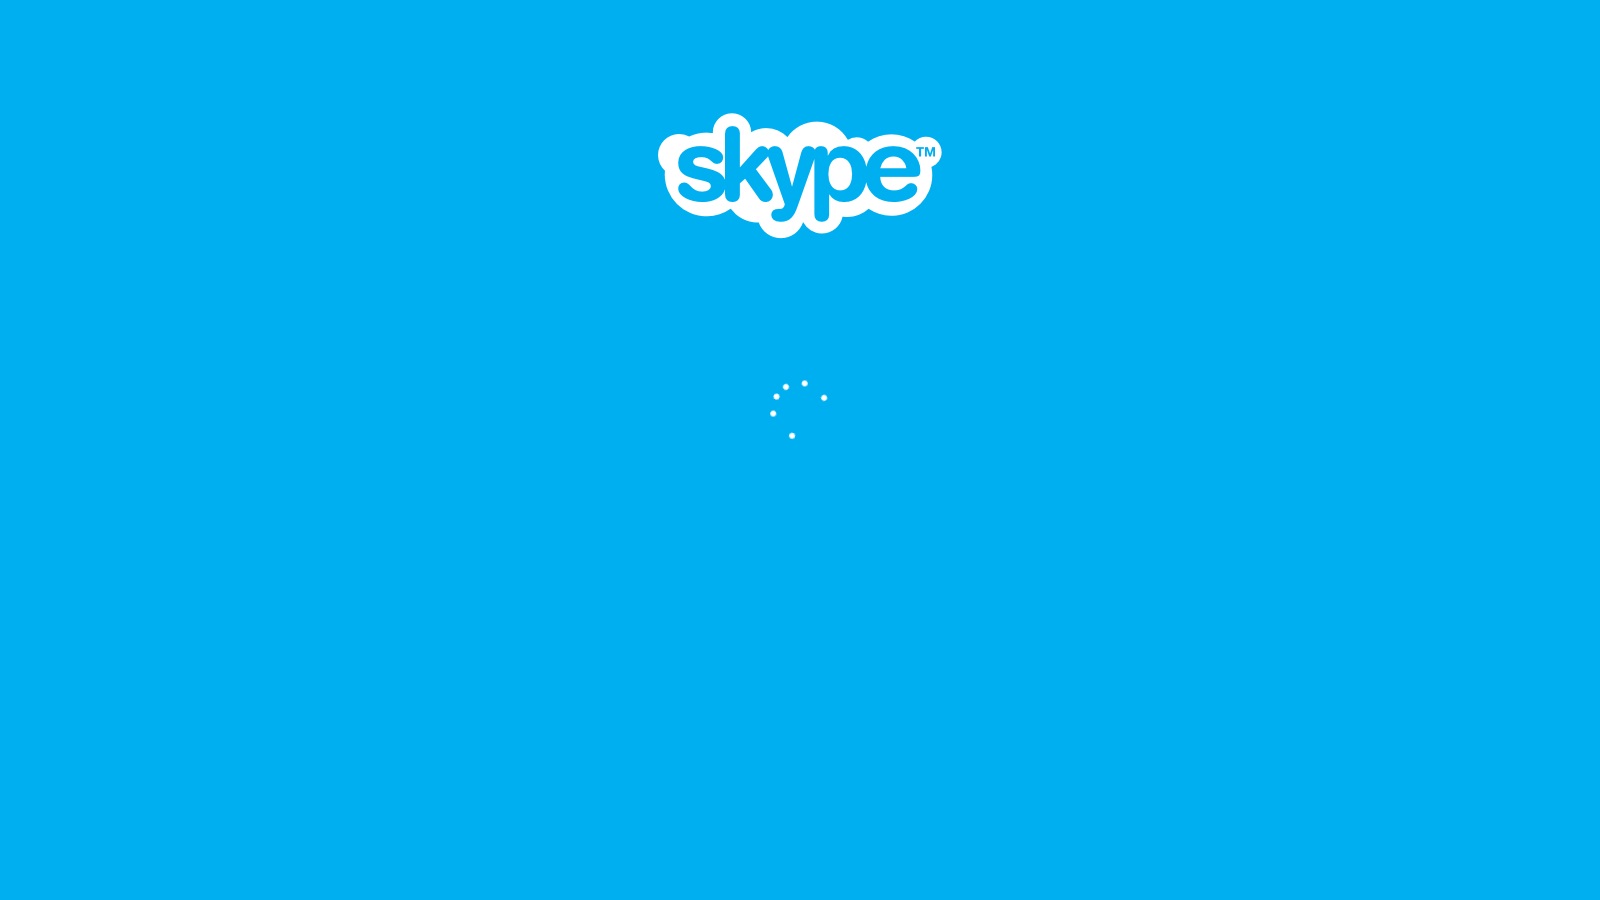 Find my skype name